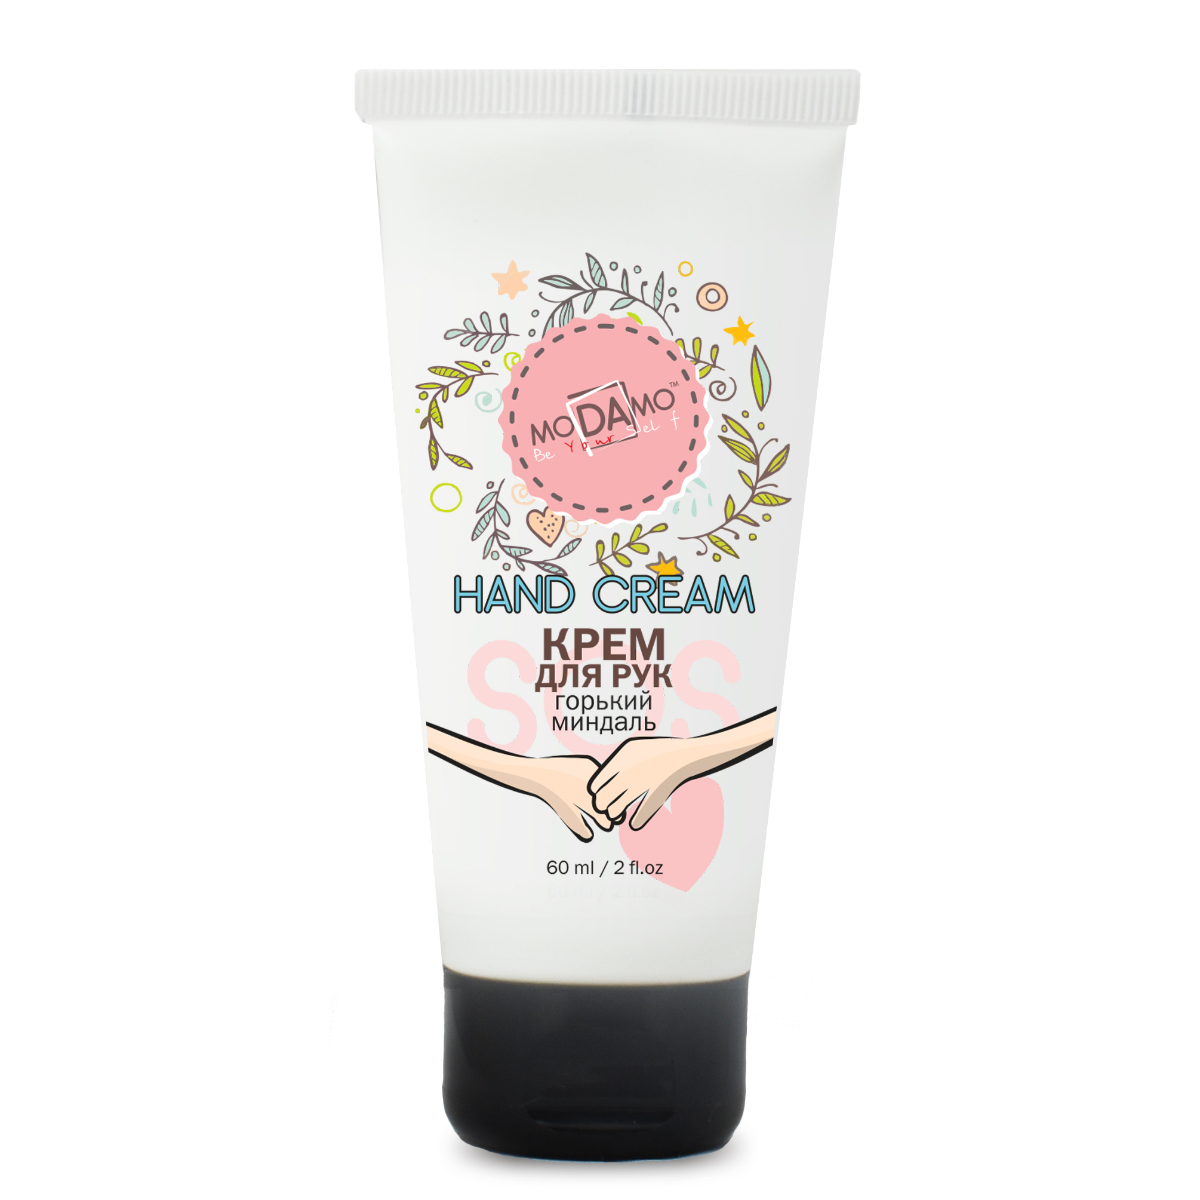 Модамо Крем для рук Hand Cream SOS 